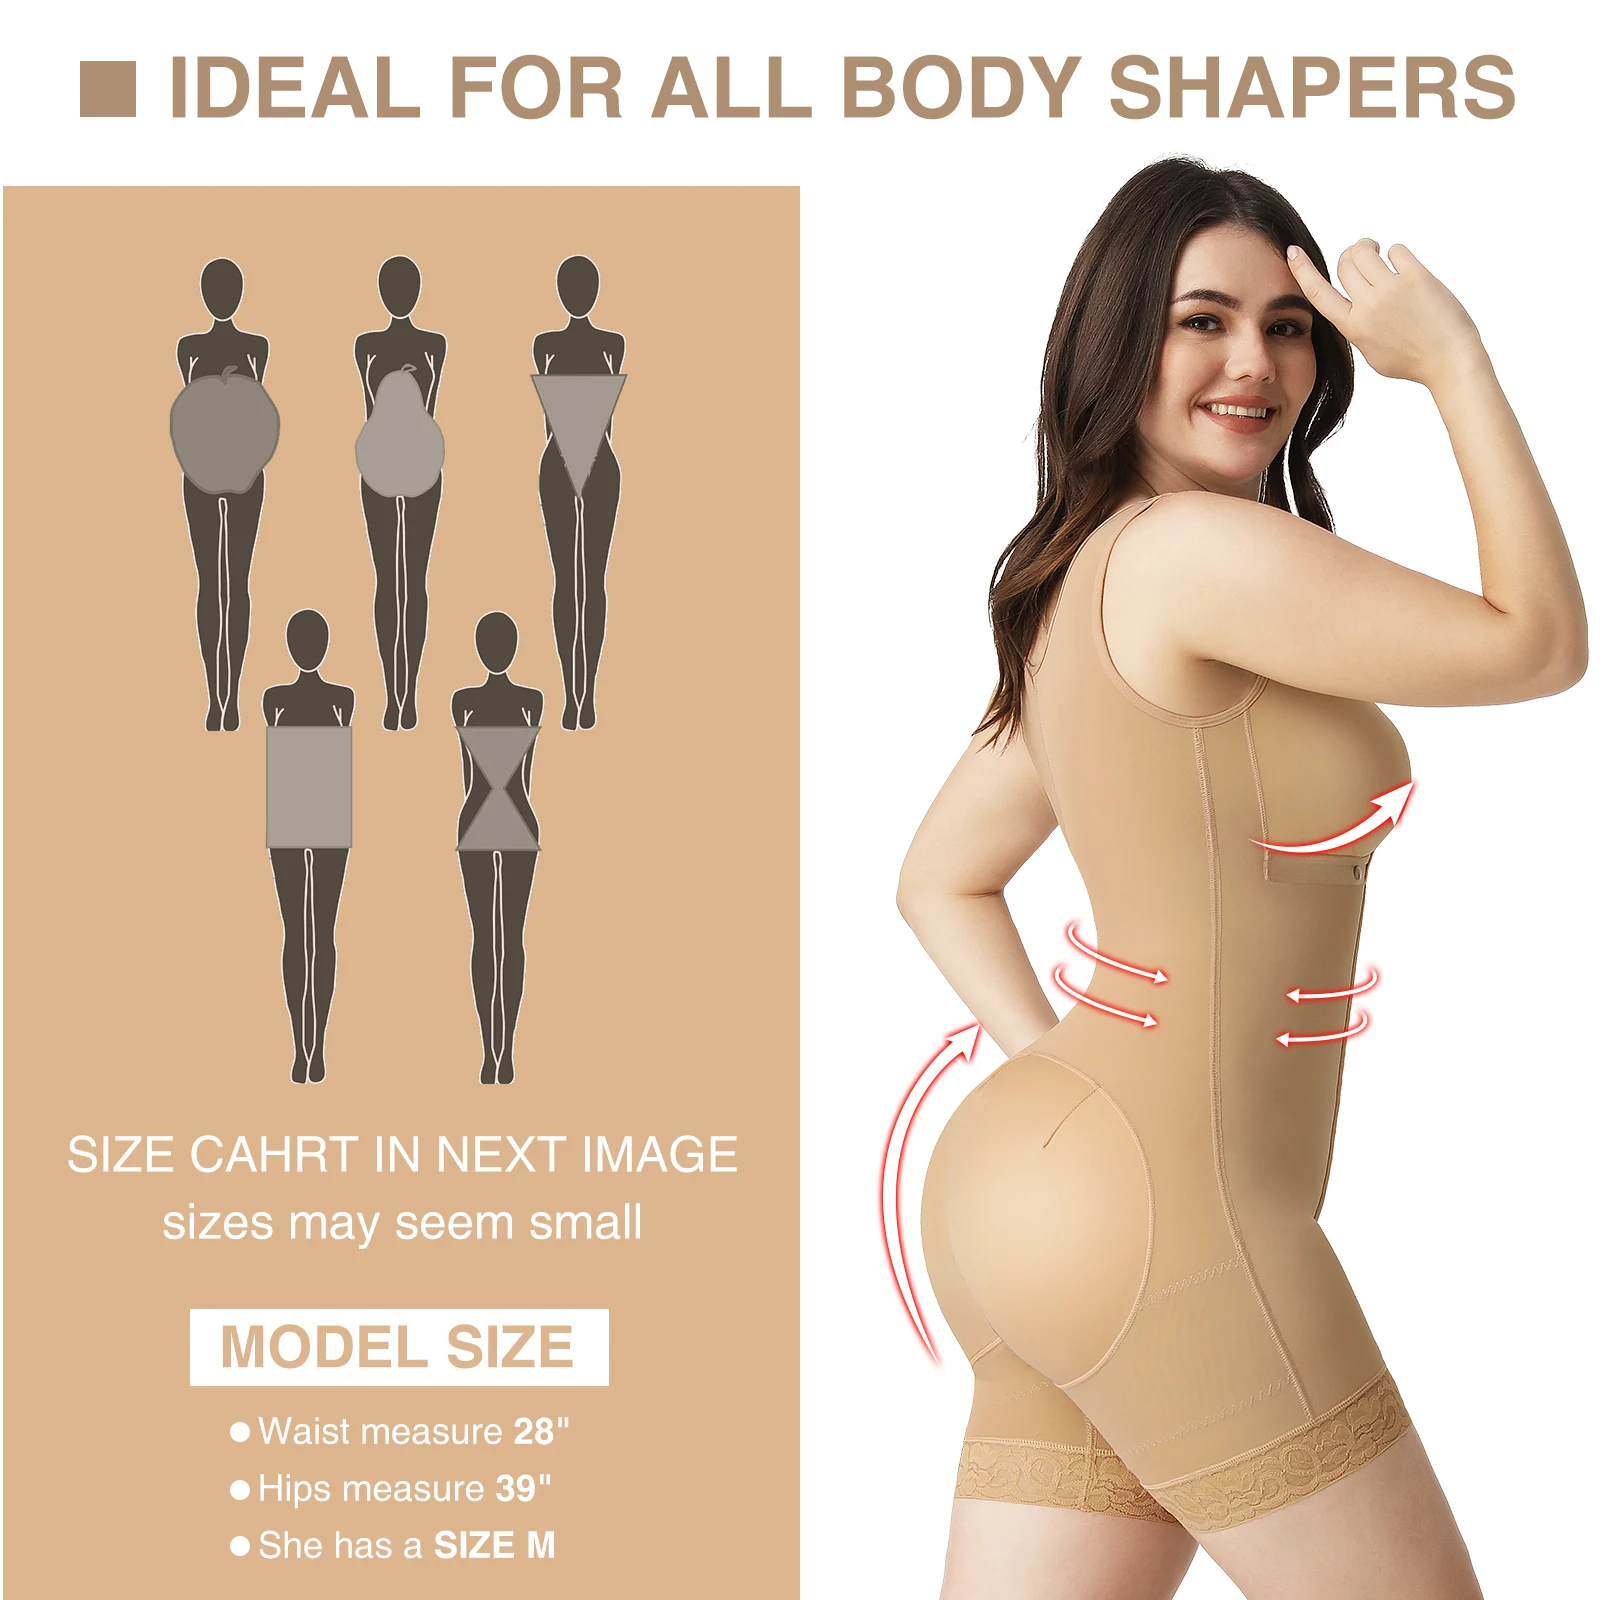 Bbl High Compression Stage 3 Post Surgery Faja Colombianas Postpartum  Garment Bodysuit Body Shaper Shapewear Women Tummy Tuck - AliExpress